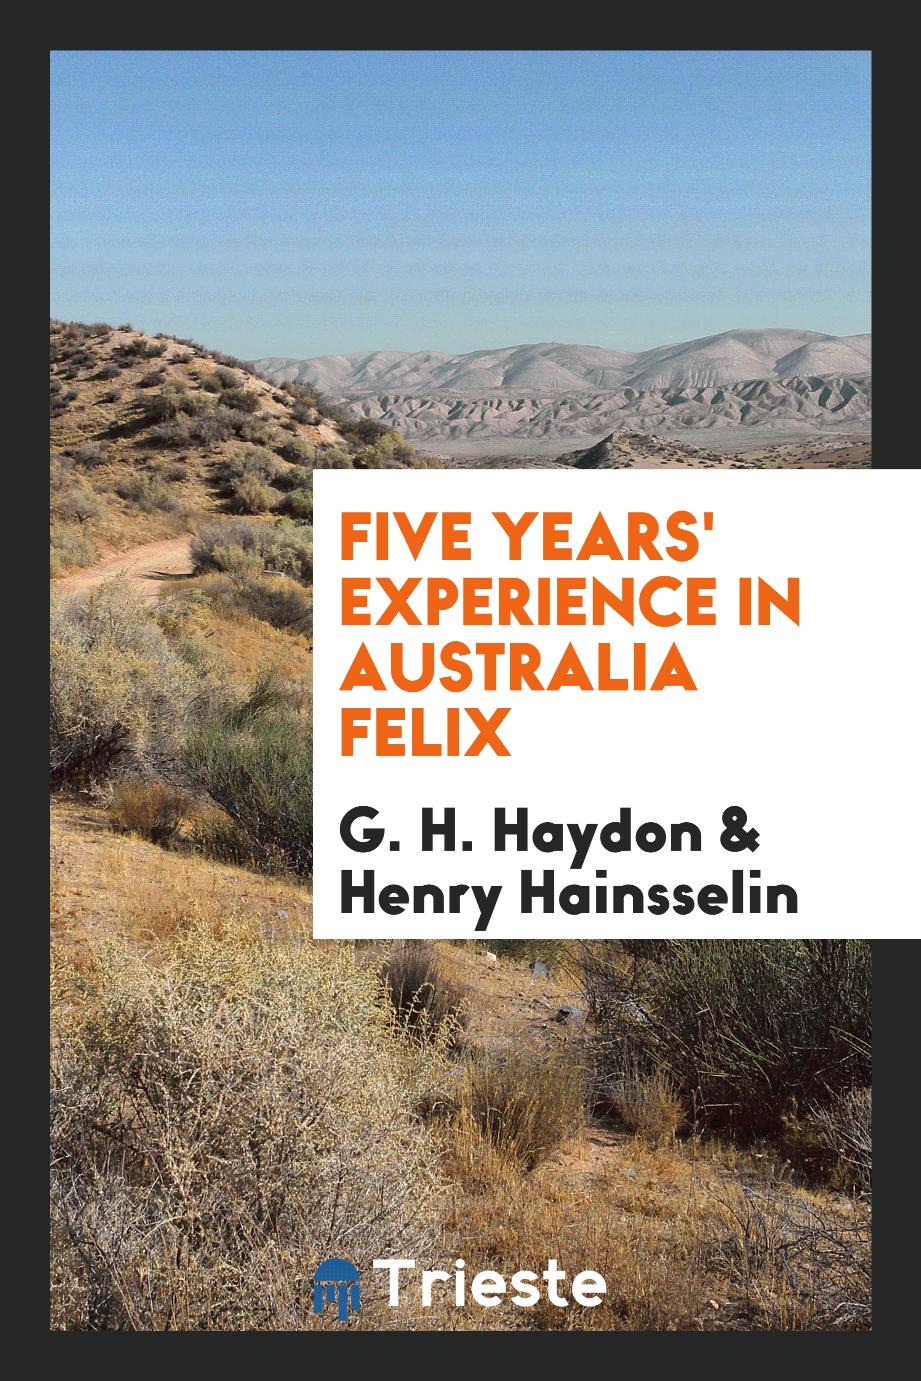 G. H. Haydon, Henry Hainsselin - Five Years' Experience in Australia Felix